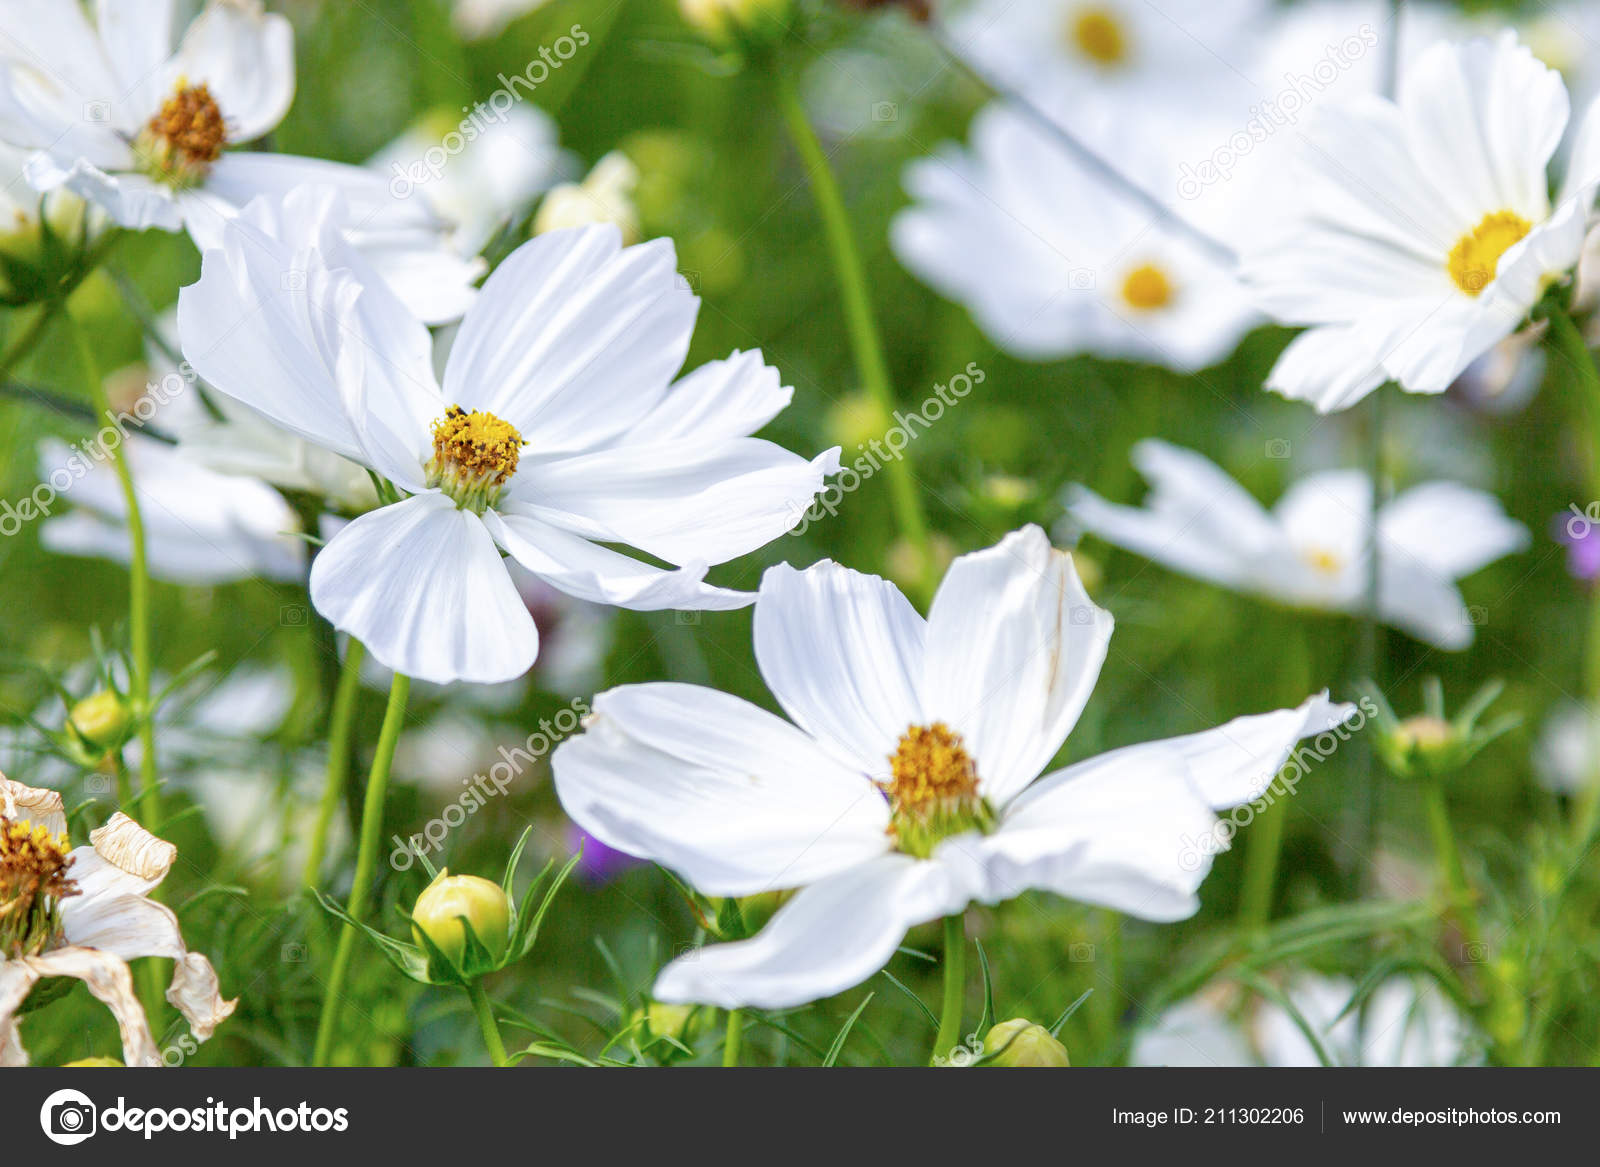 White Garden Cosmos Flower Bed Flowers Stock Photo C Huettenhoelscher 211302206